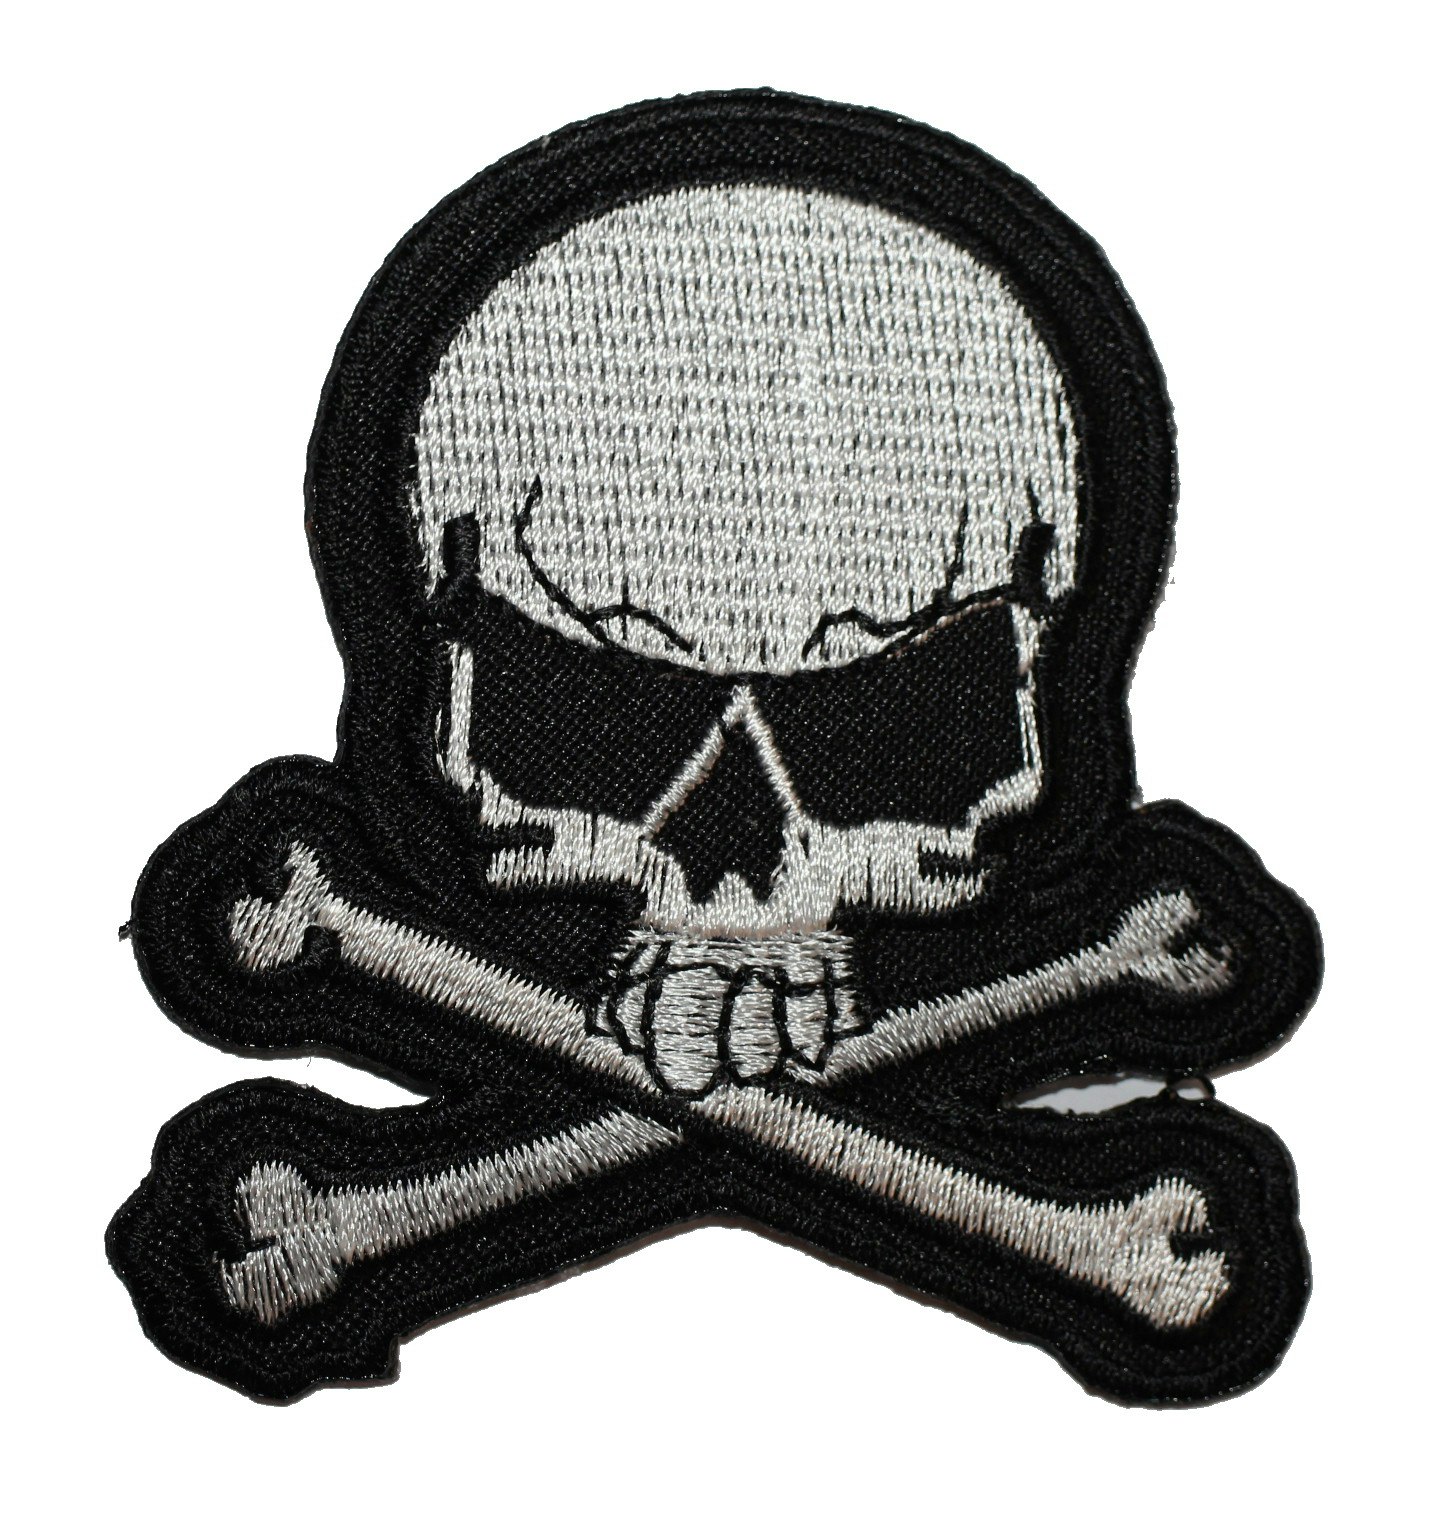 Skull/bones patch